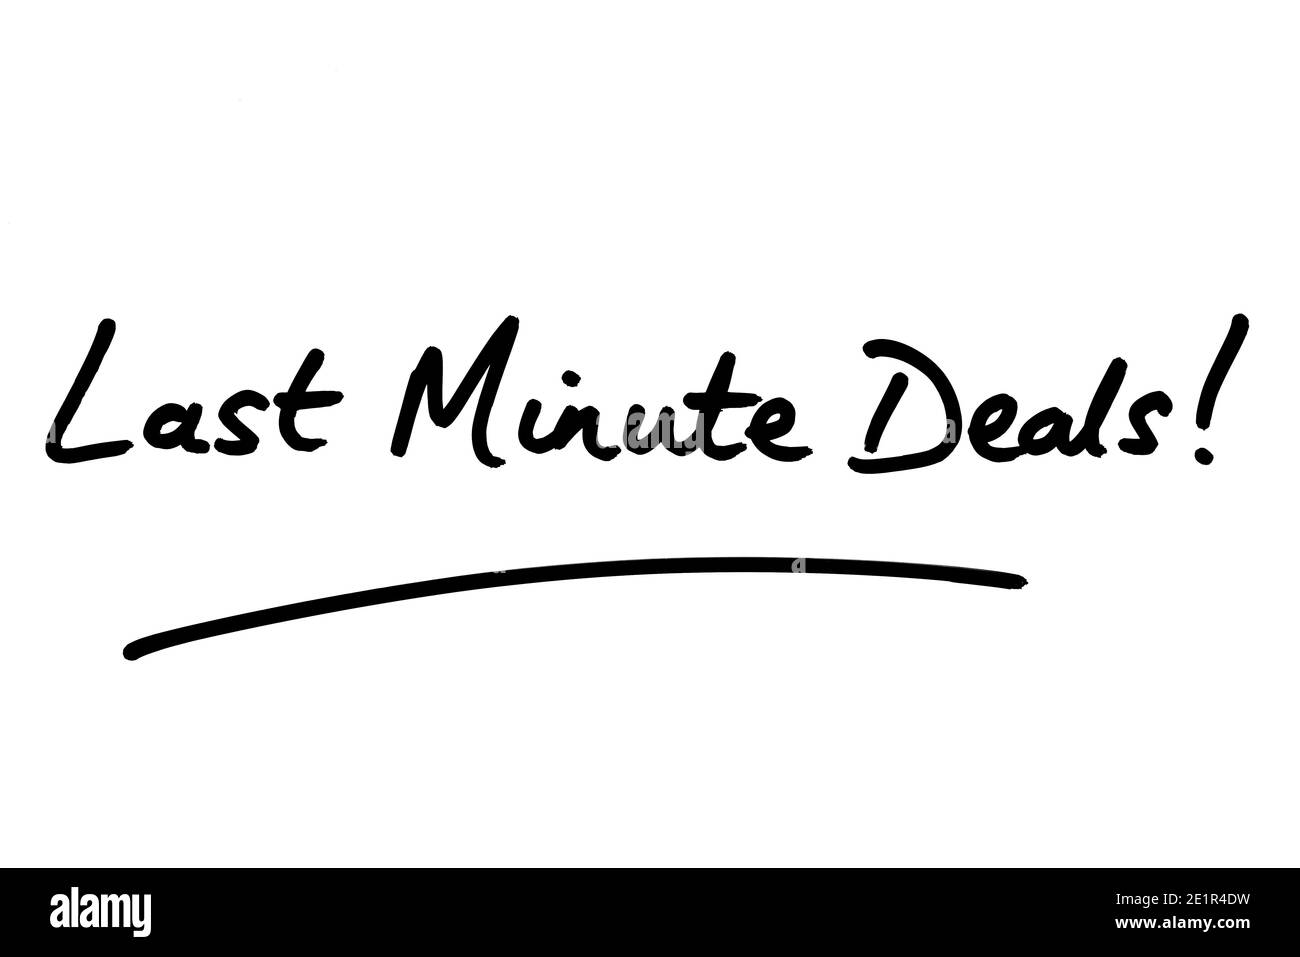 Last Minute Deals! handwritten on a white background. Stock Photo